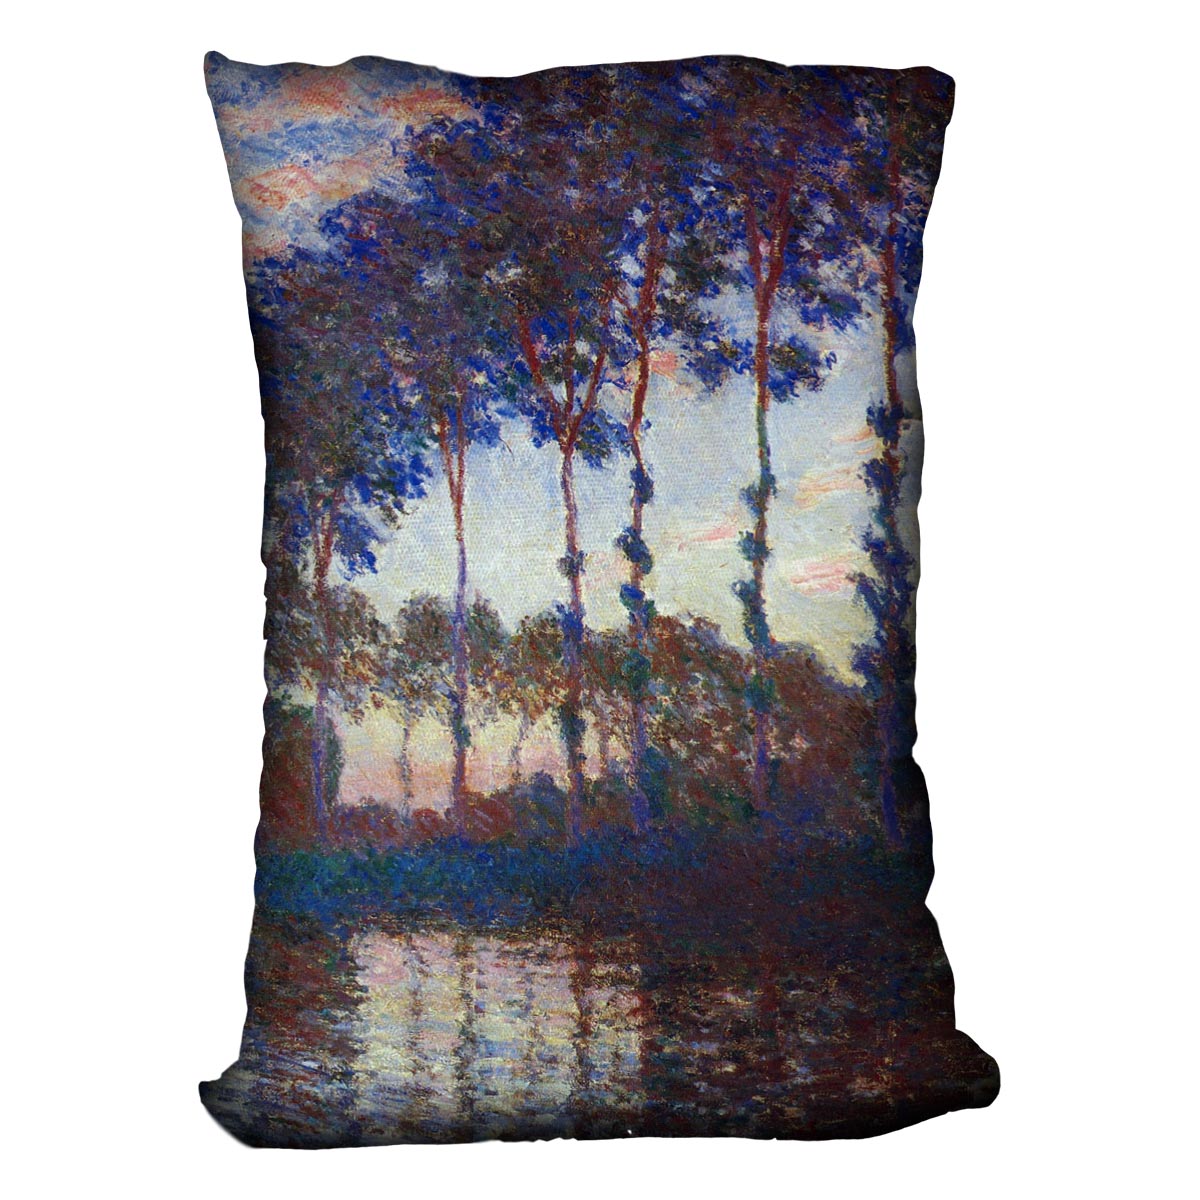 Poplars sunset by Monet Cushion